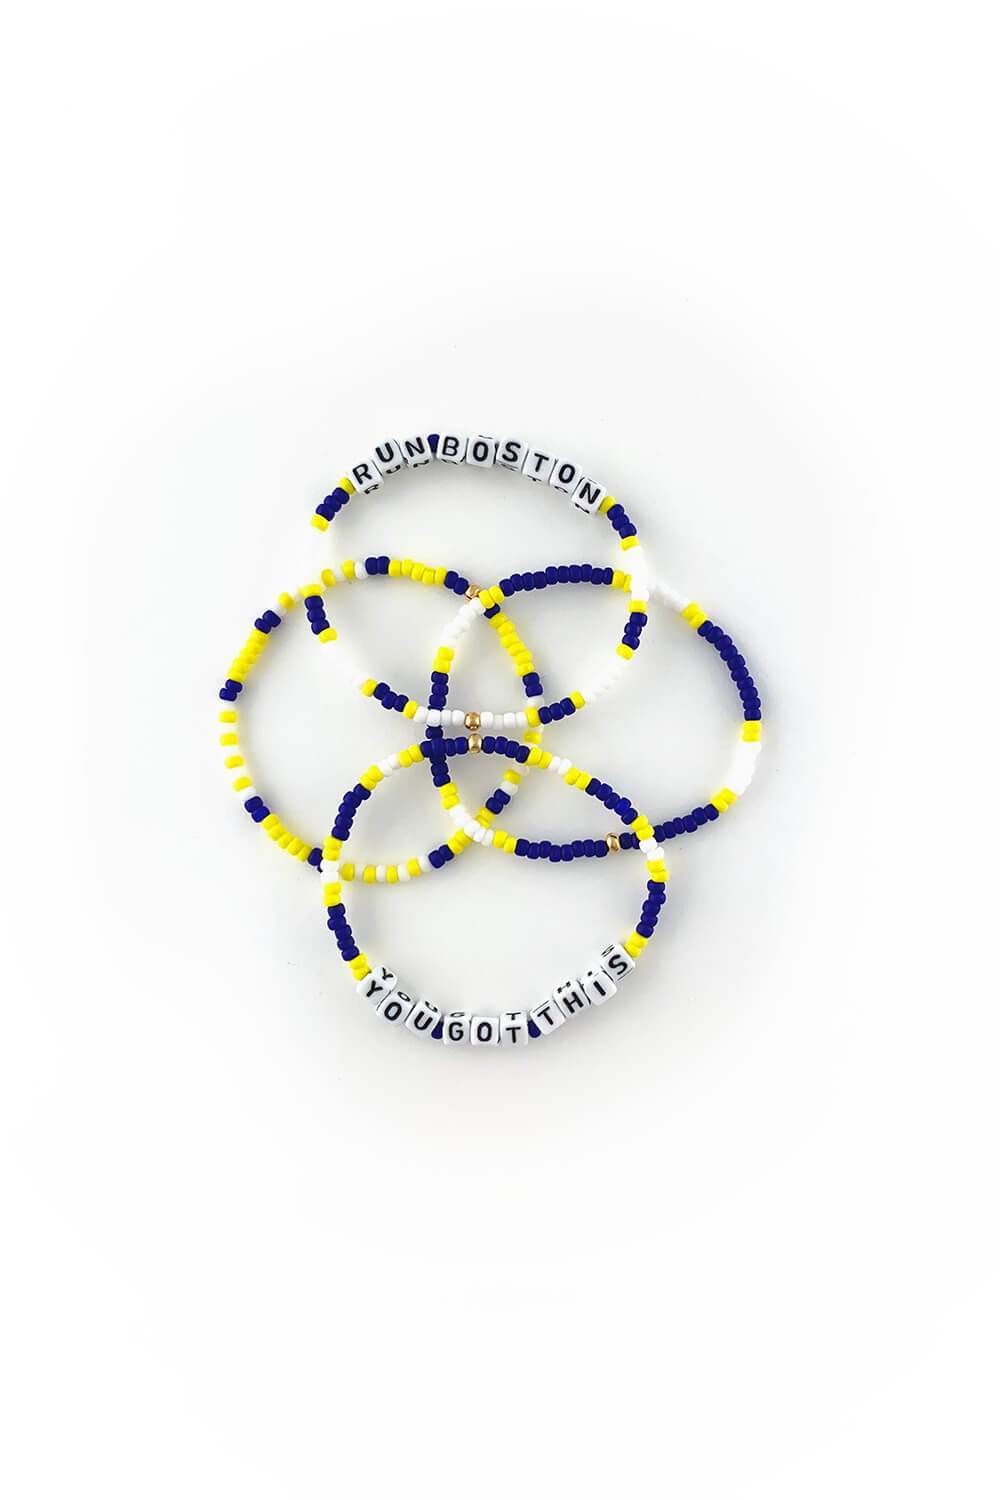 Run Boston Bracelet - Limited Edition - Sarah Marie Design Studio